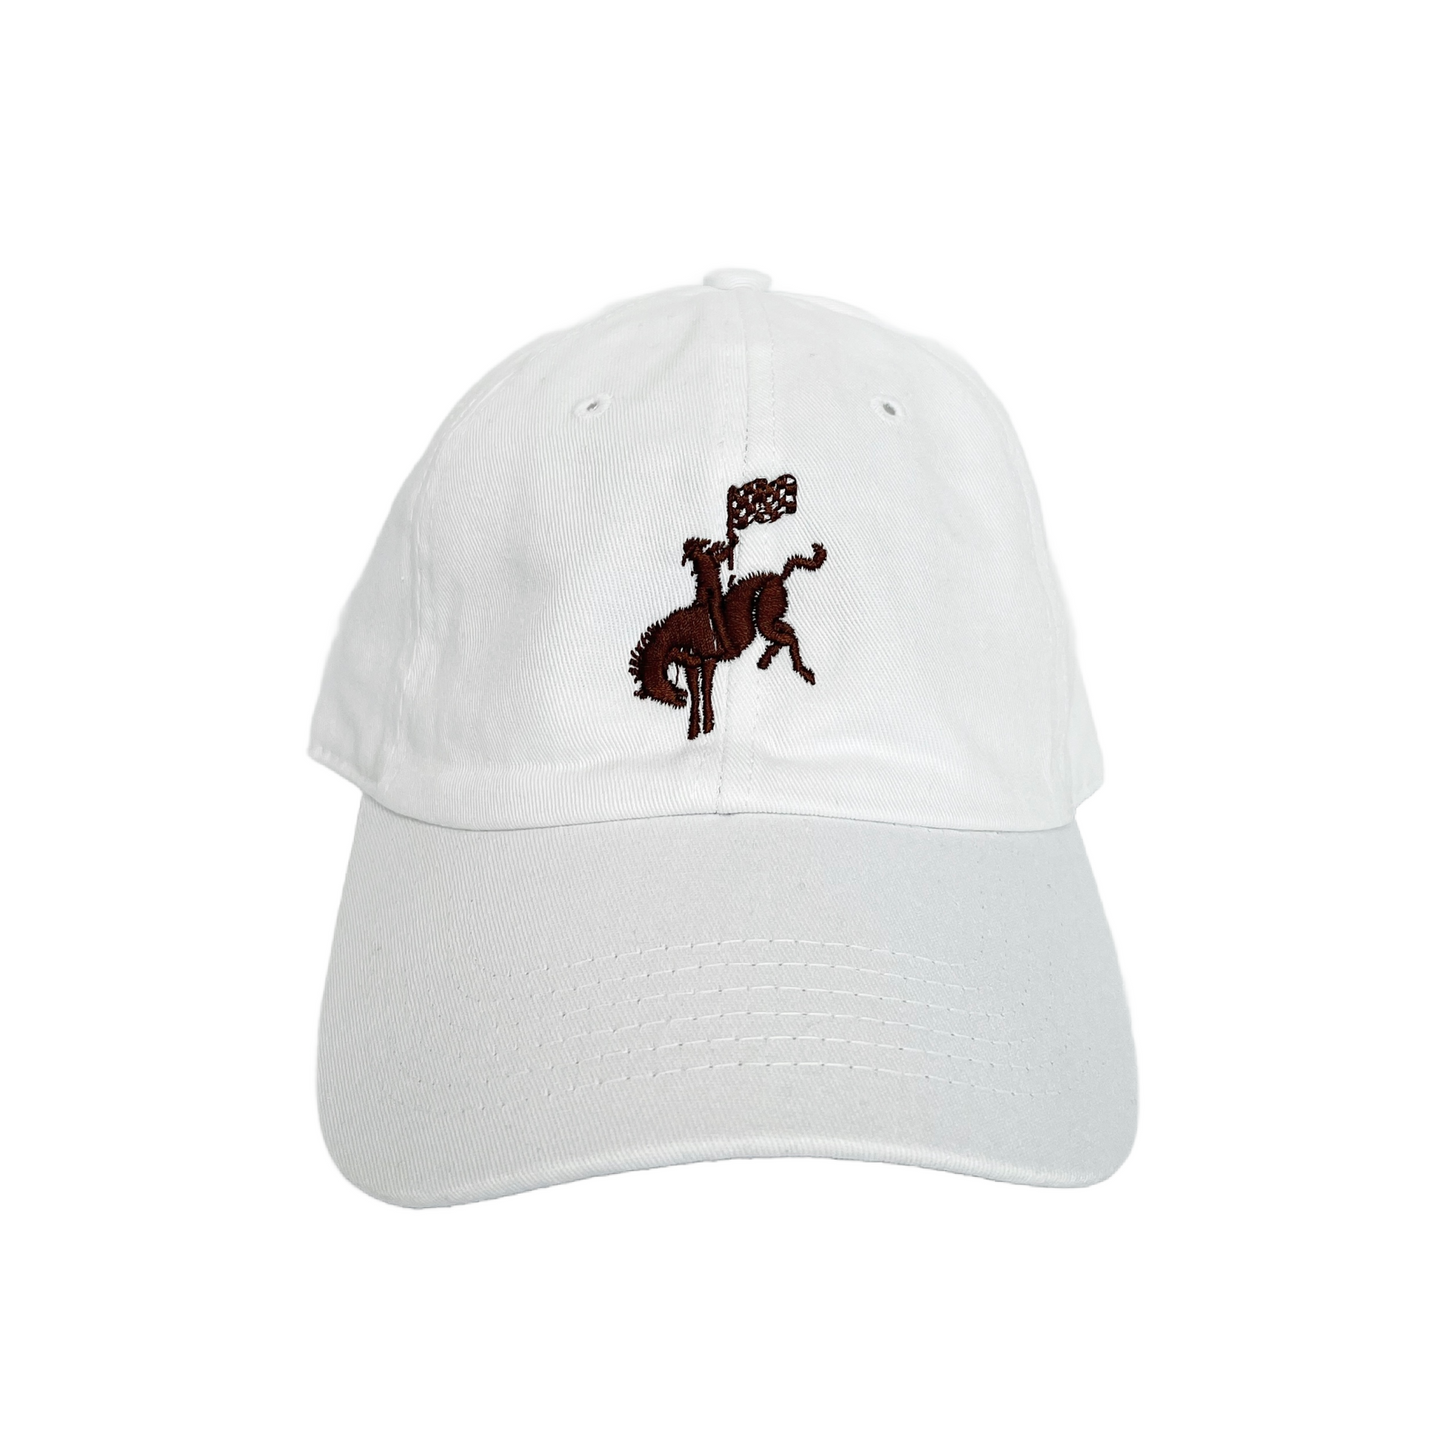 Racing Cowboy Baseball Hat - White